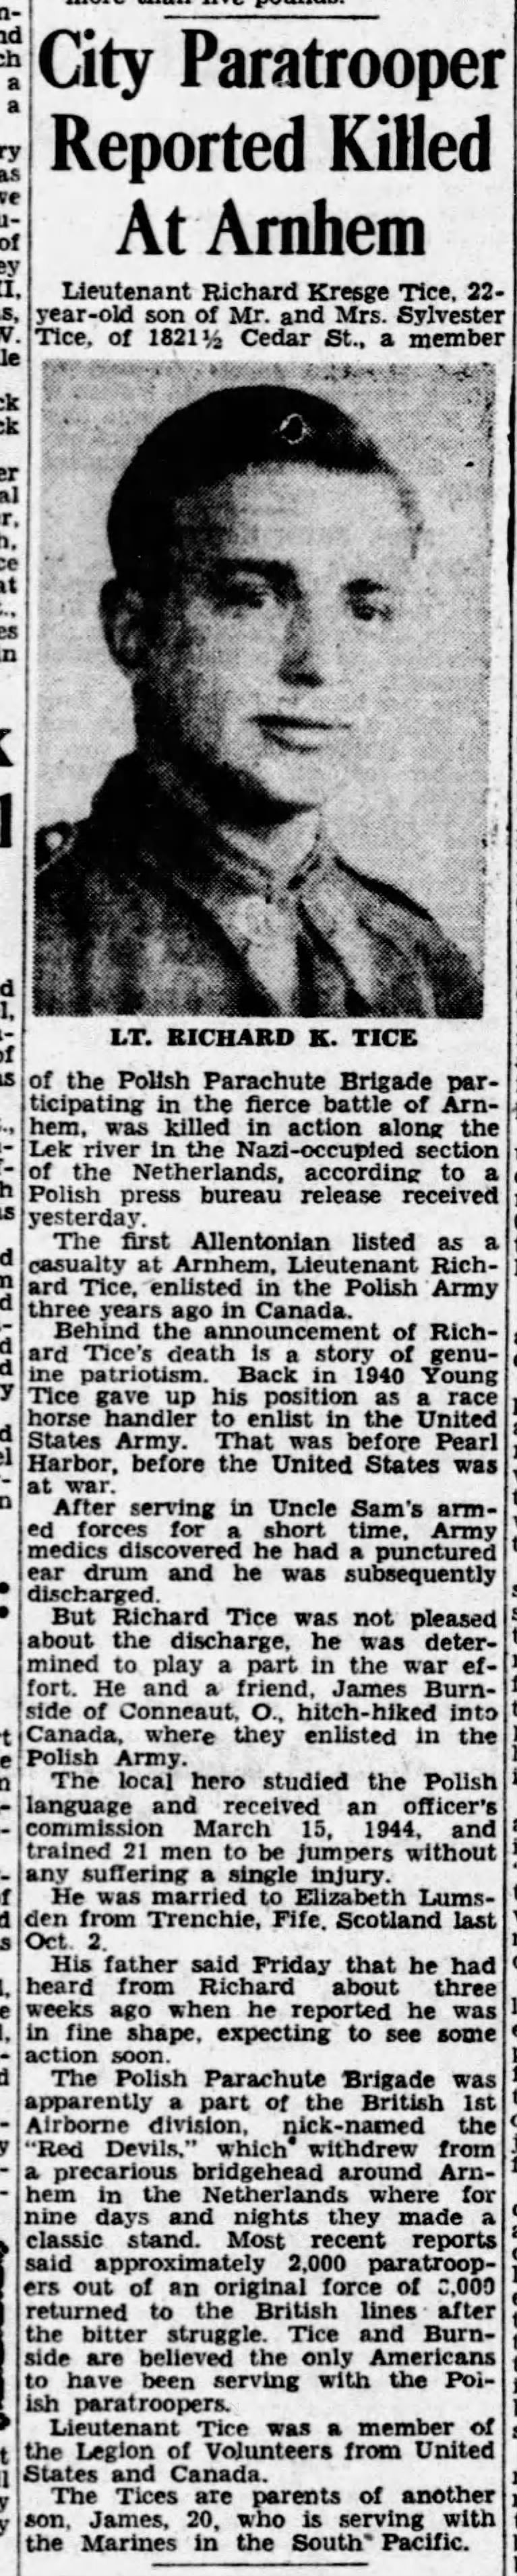 Paratrooper Richard Kresge Tice Killed At Arnhem.
"The Morning Call"
Sat. 30 Sep. 1944